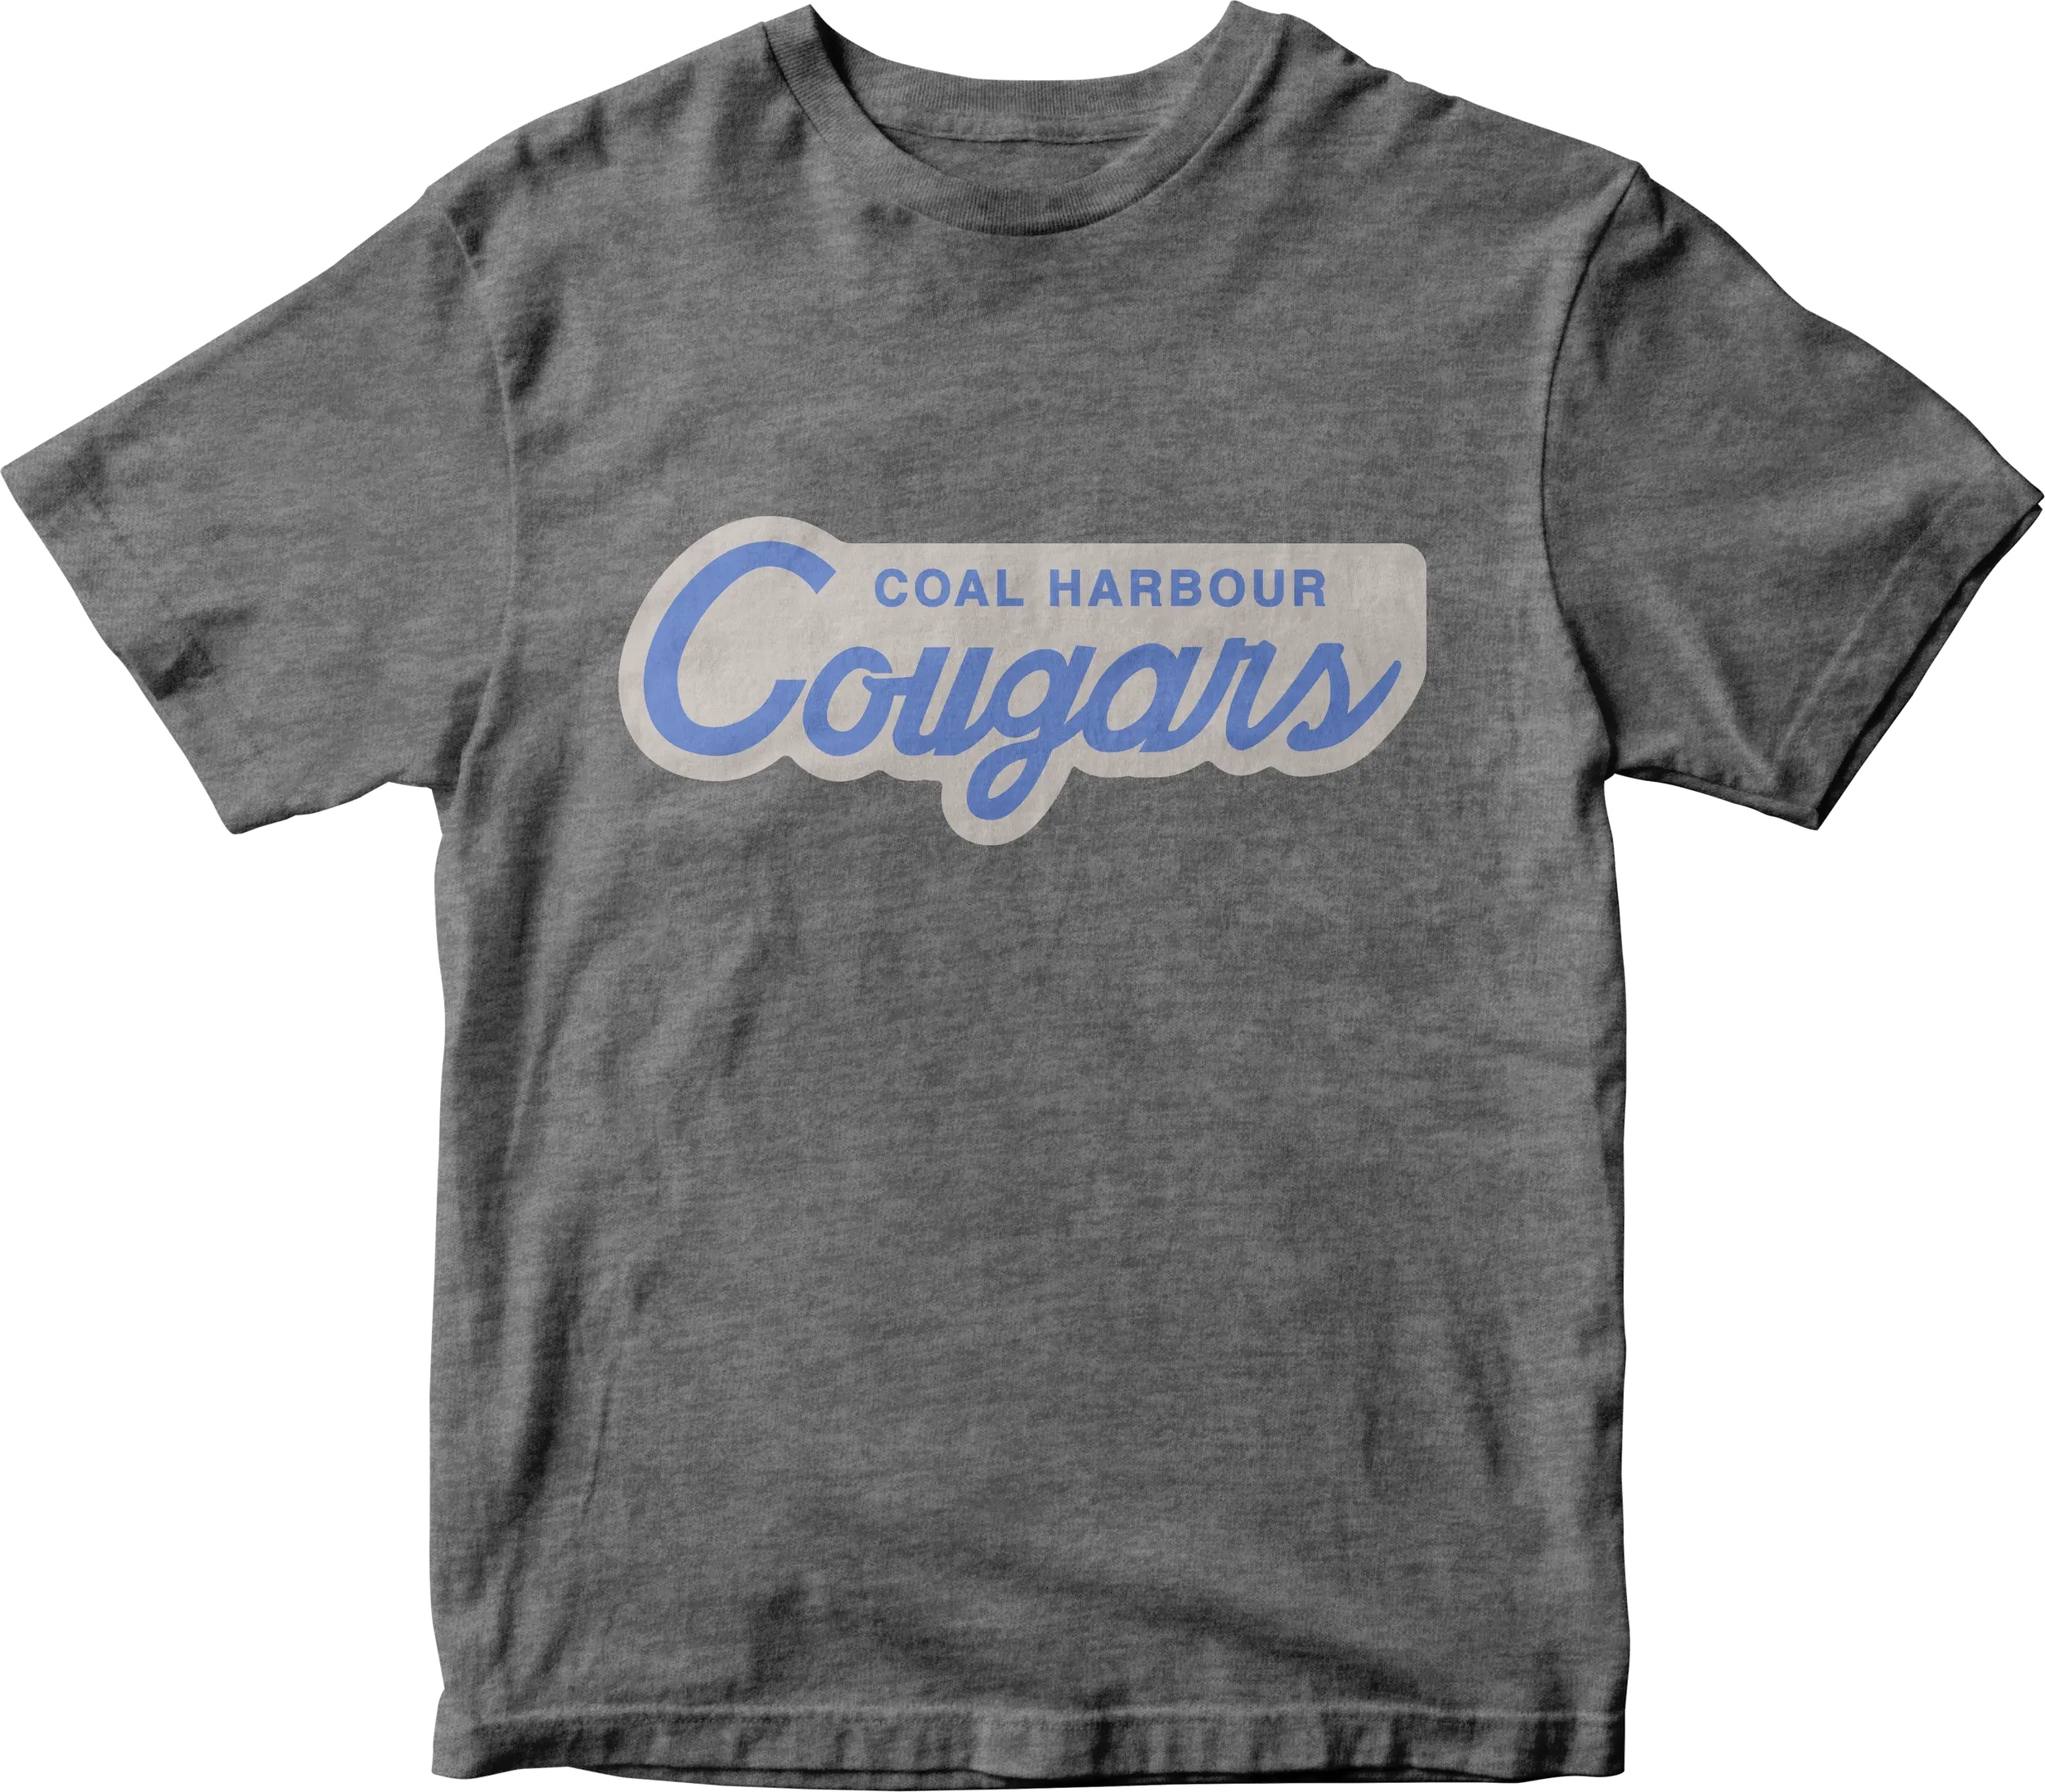 Coal Harbour Cougars Team T-Shirt